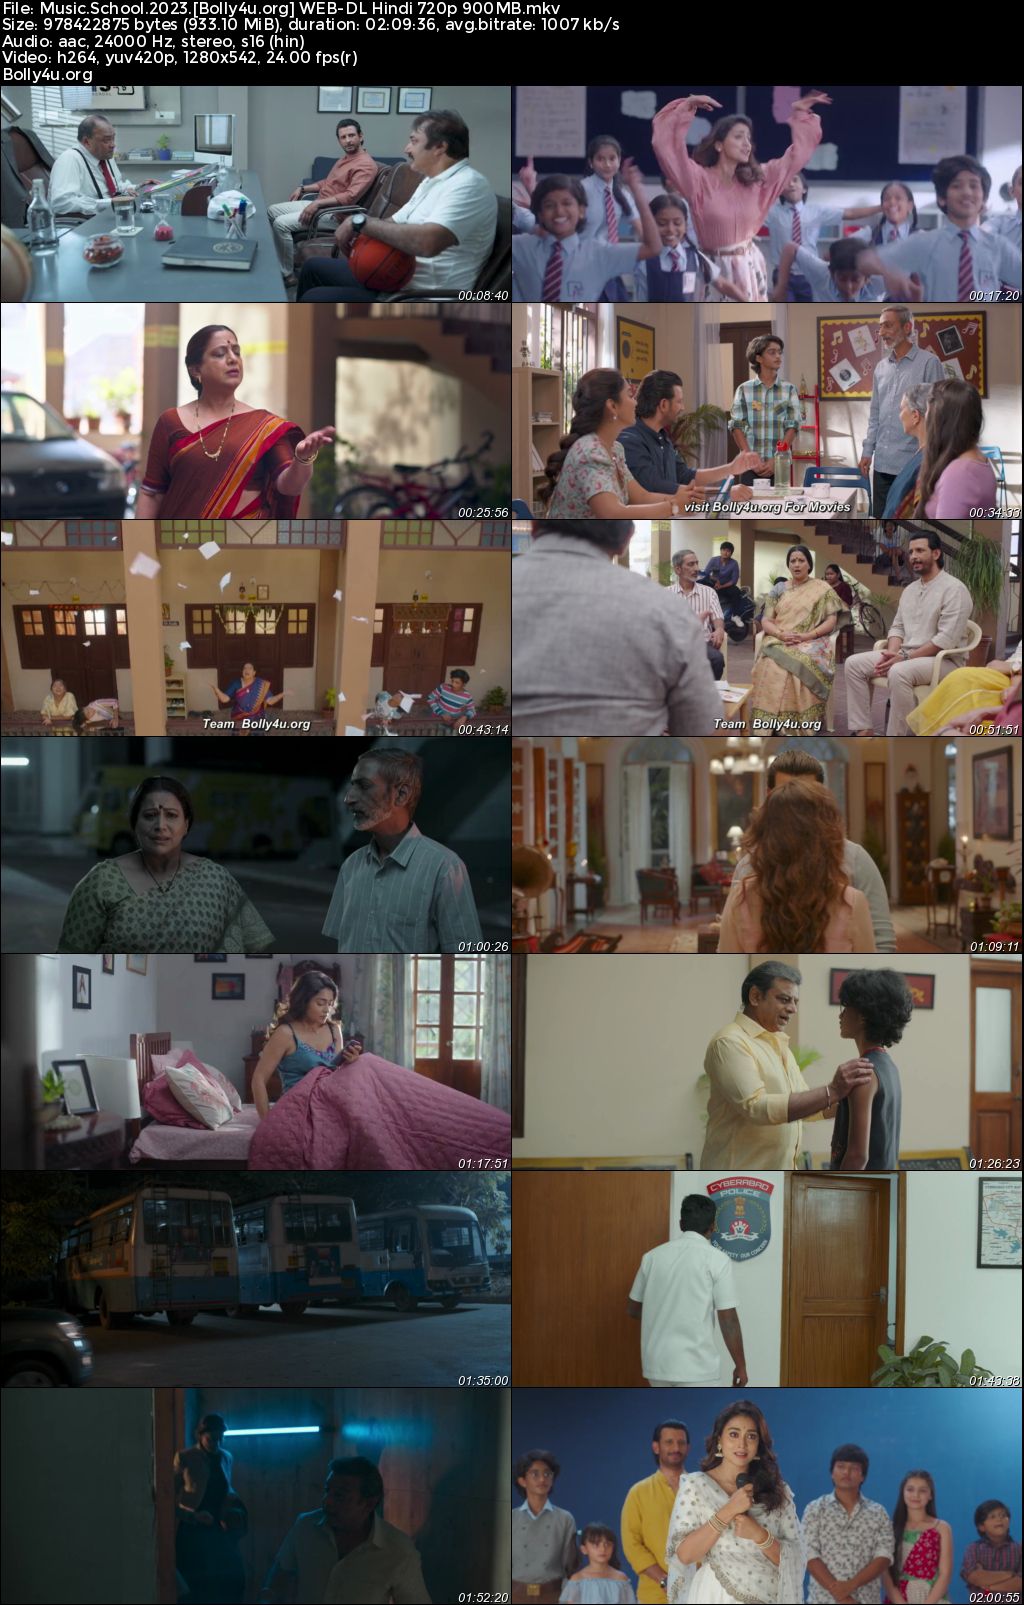 Music School 2023 WEB-DL Hindi Full Movie Download 1080p 720p 480p